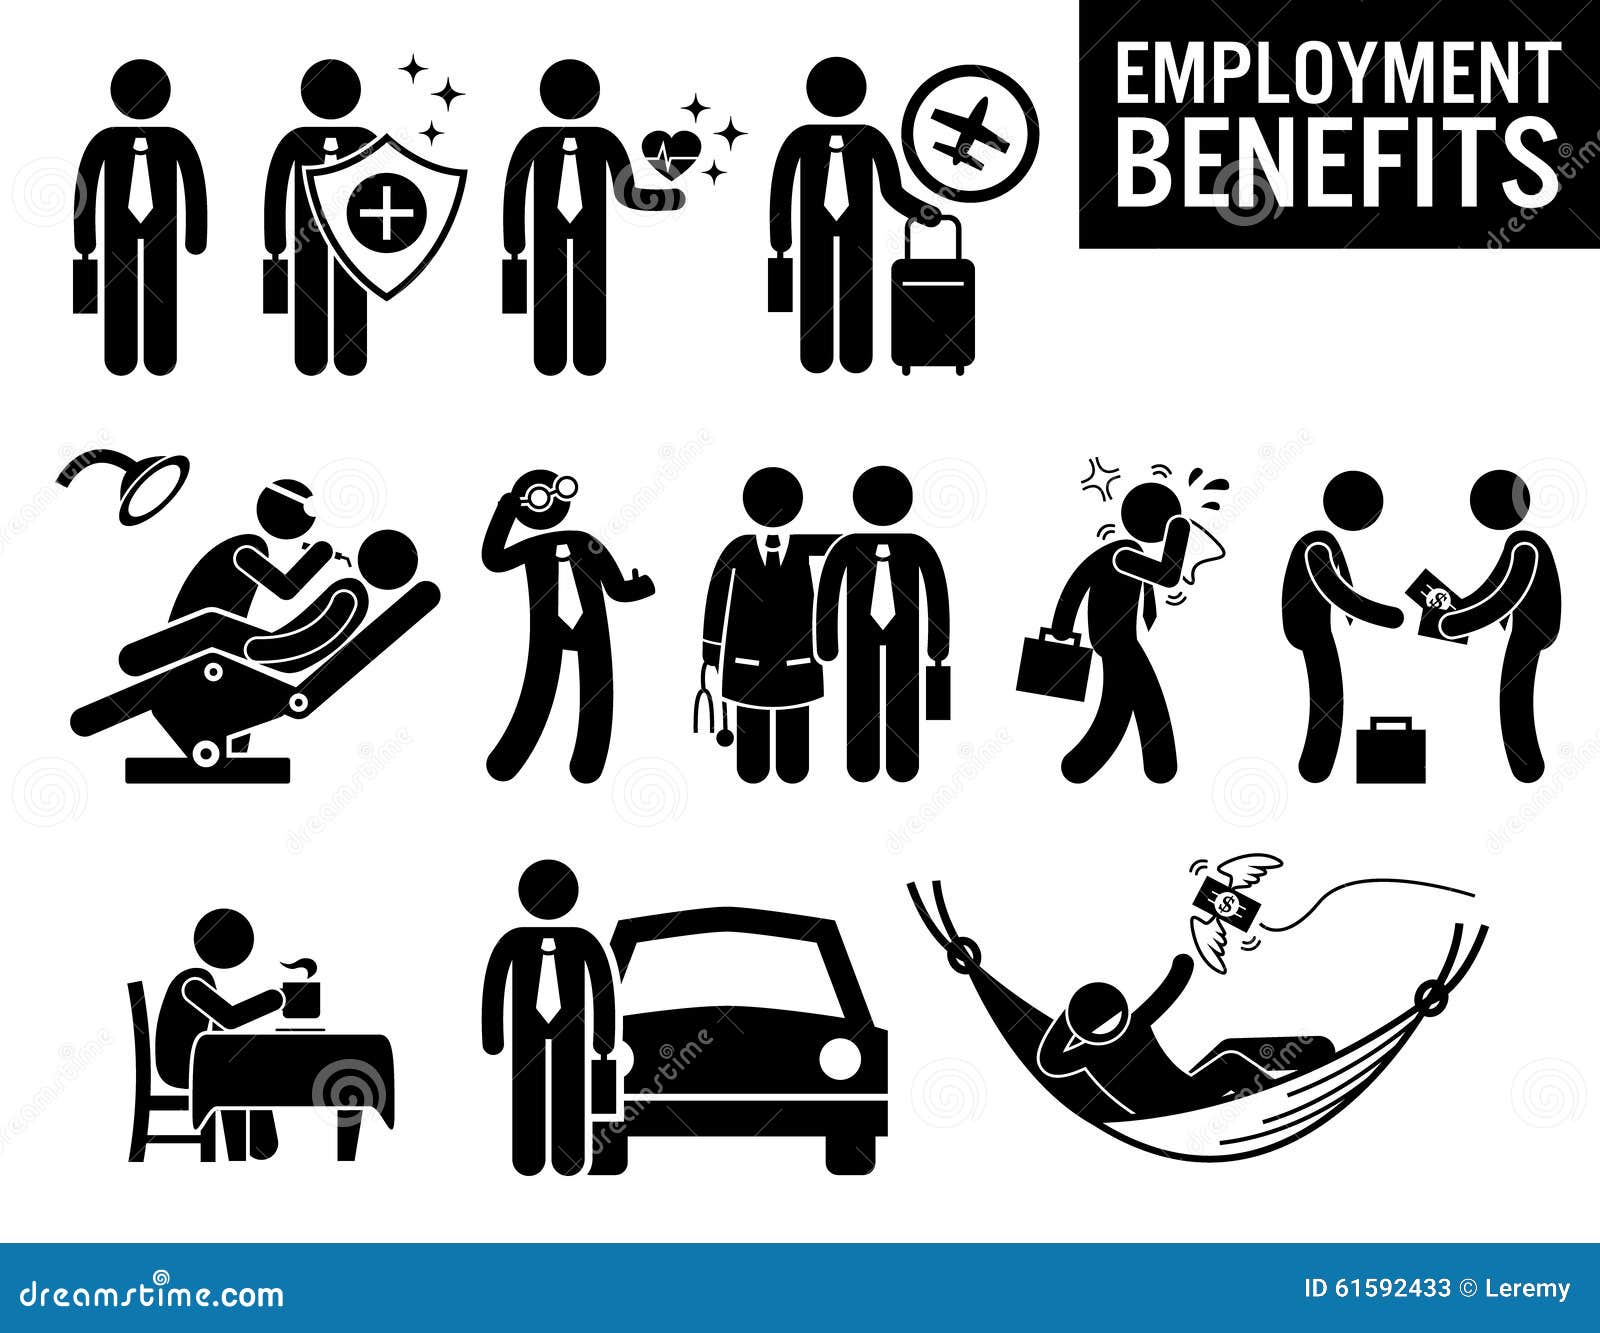 clipart employee benefits - photo #23